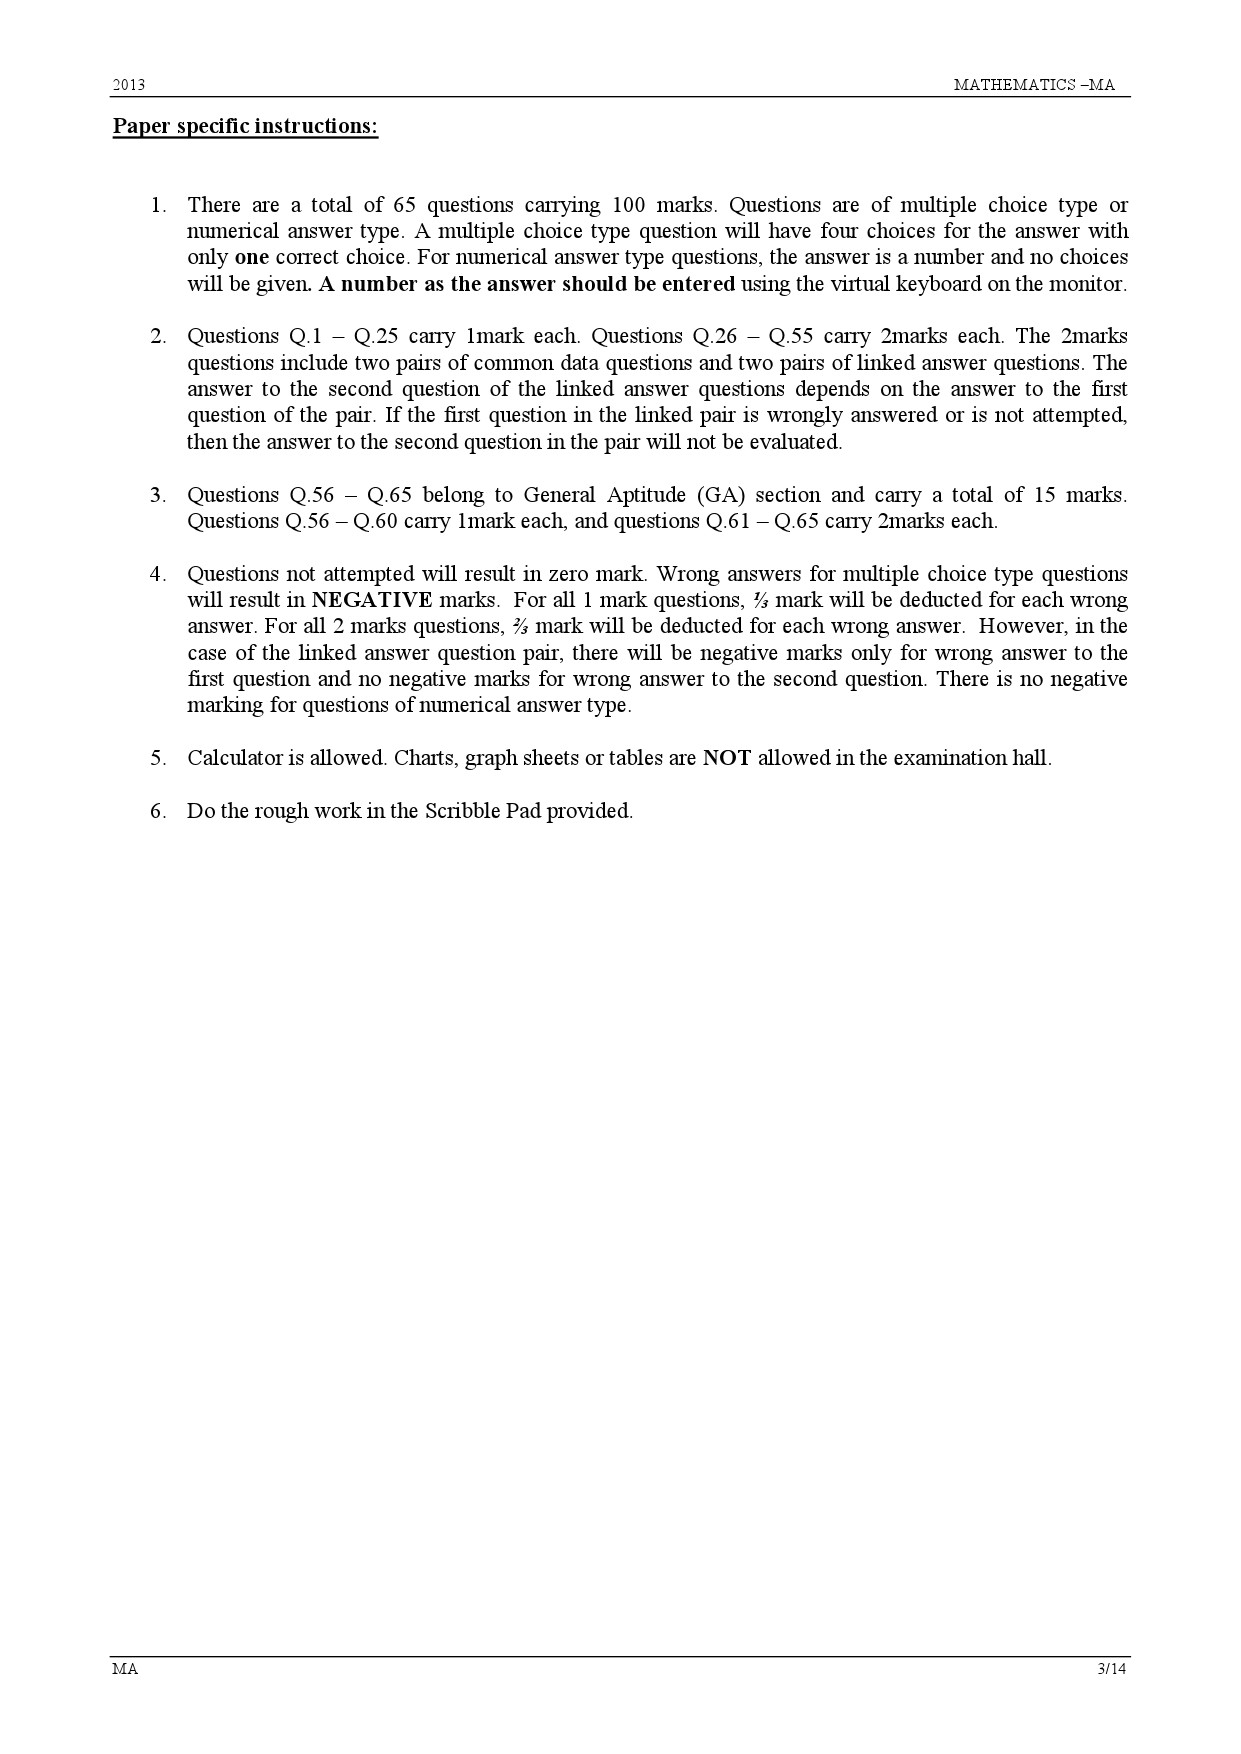 GATE Exam Question Paper 2013 Mathematics 3